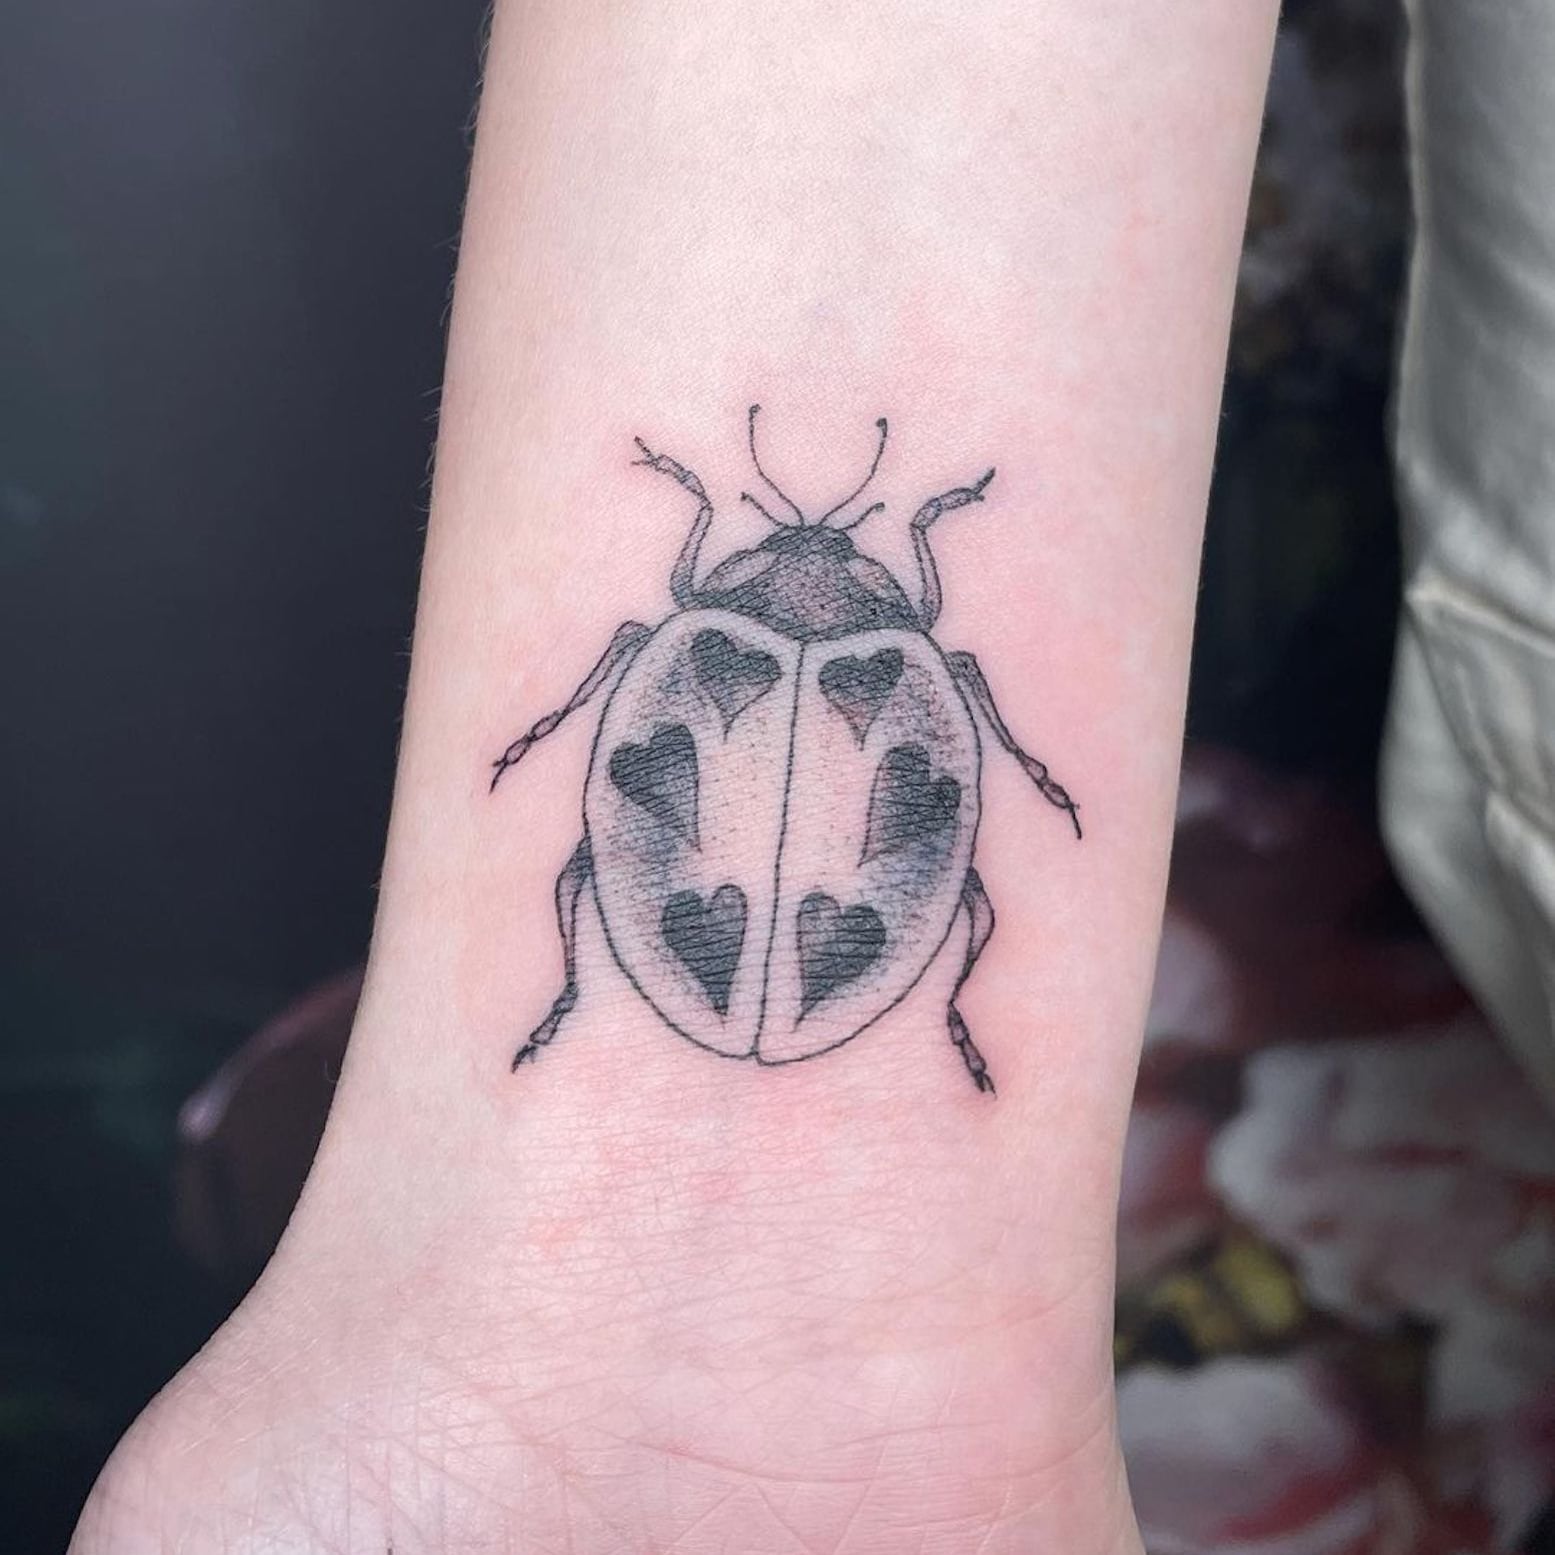 Bug tattoos